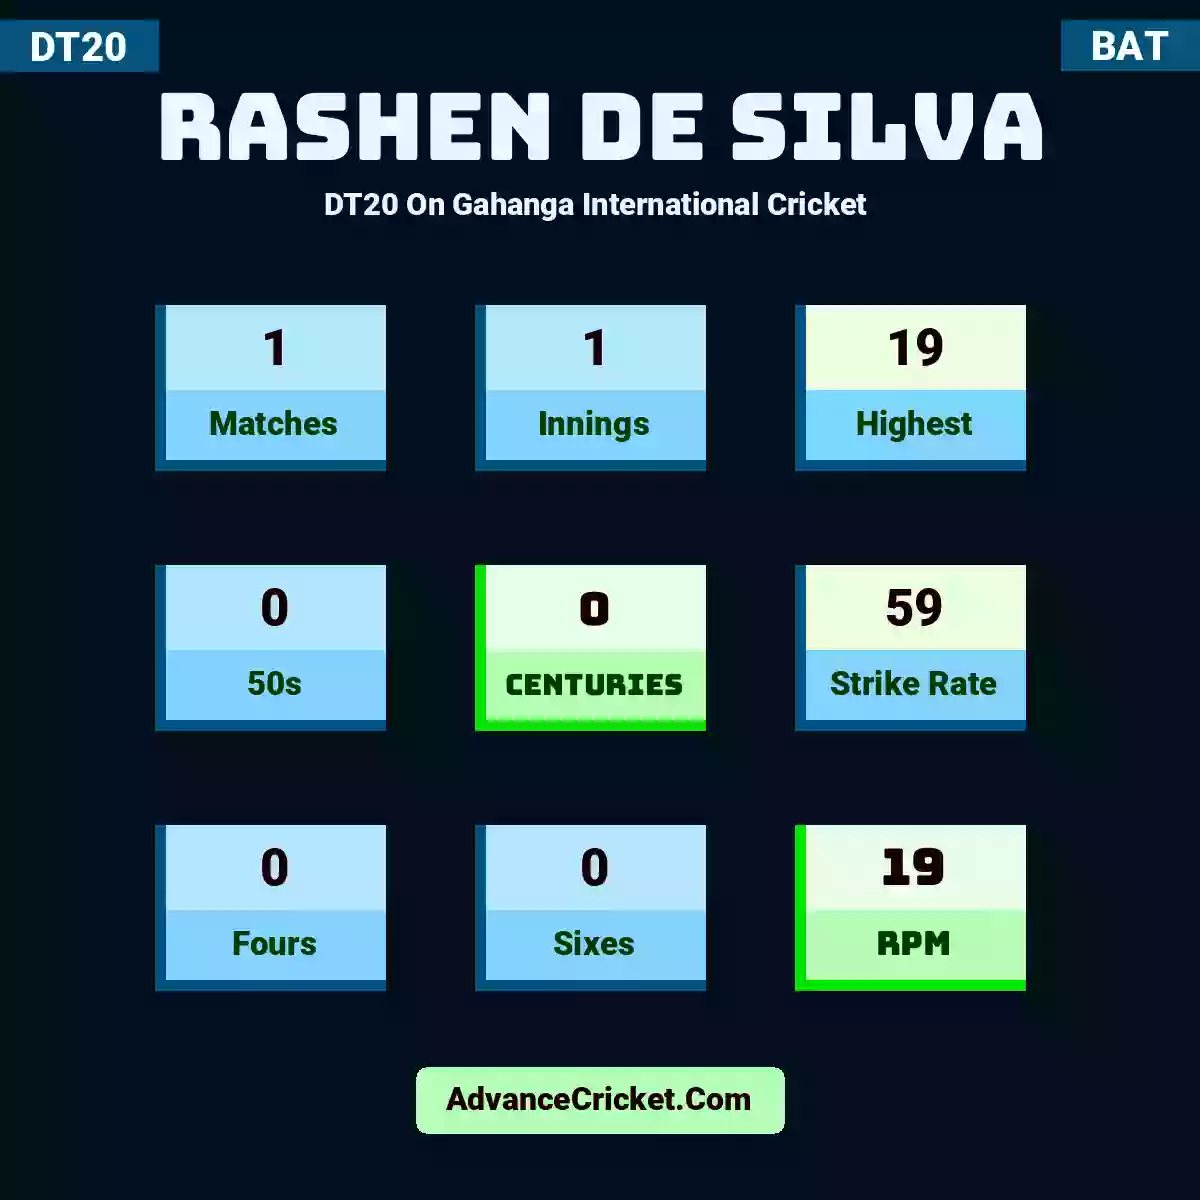 Rashen De Silva DT20  On Gahanga International Cricket , Rashen De Silva played 1 matches, scored 19 runs as highest, 0 half-centuries, and 0 centuries, with a strike rate of 59. R.De.Silva hit 0 fours and 0 sixes, with an RPM of 19.